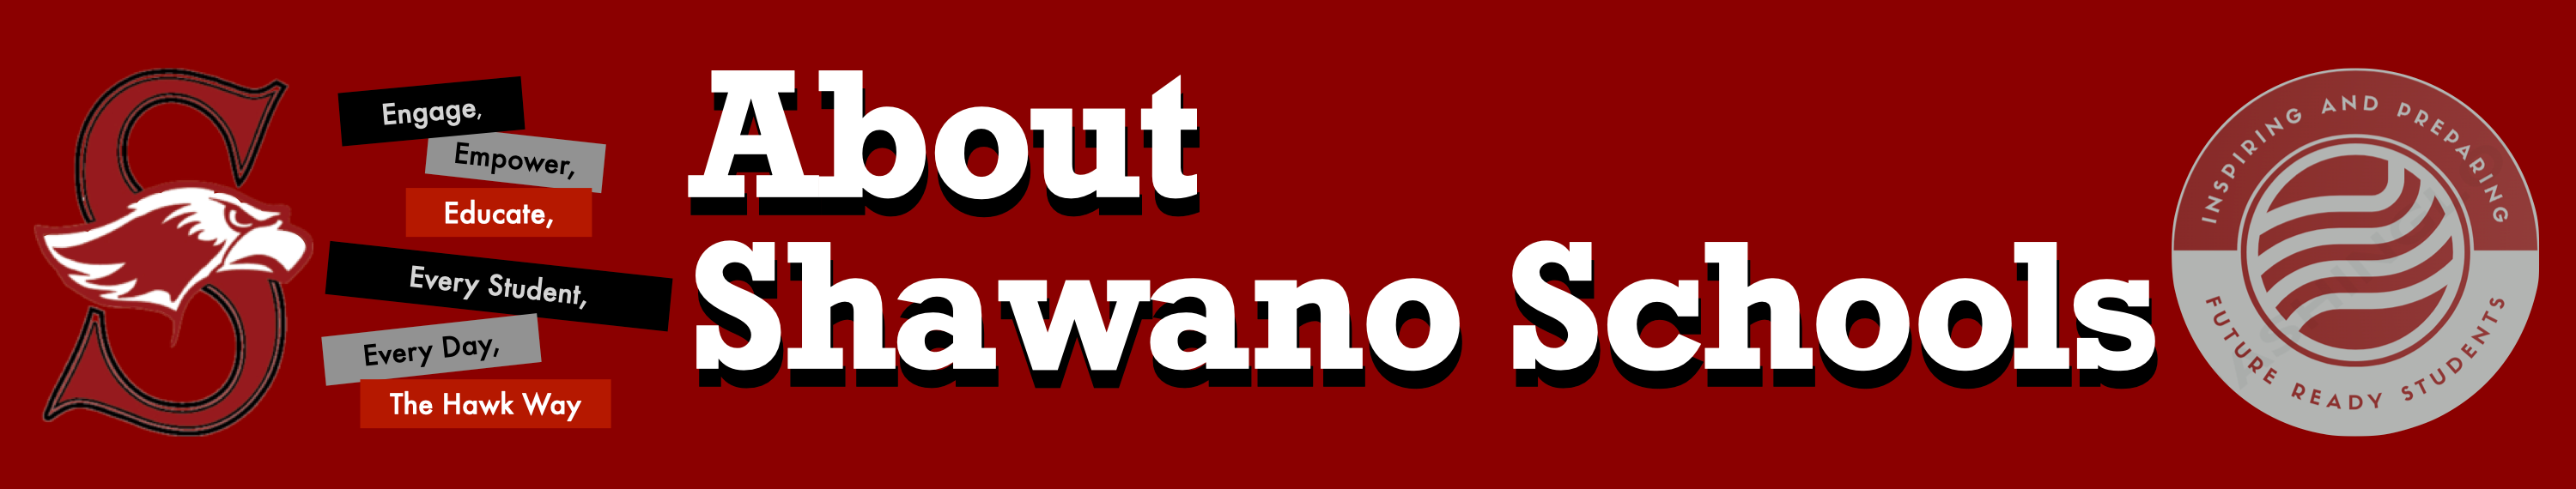 About Shawano Schools